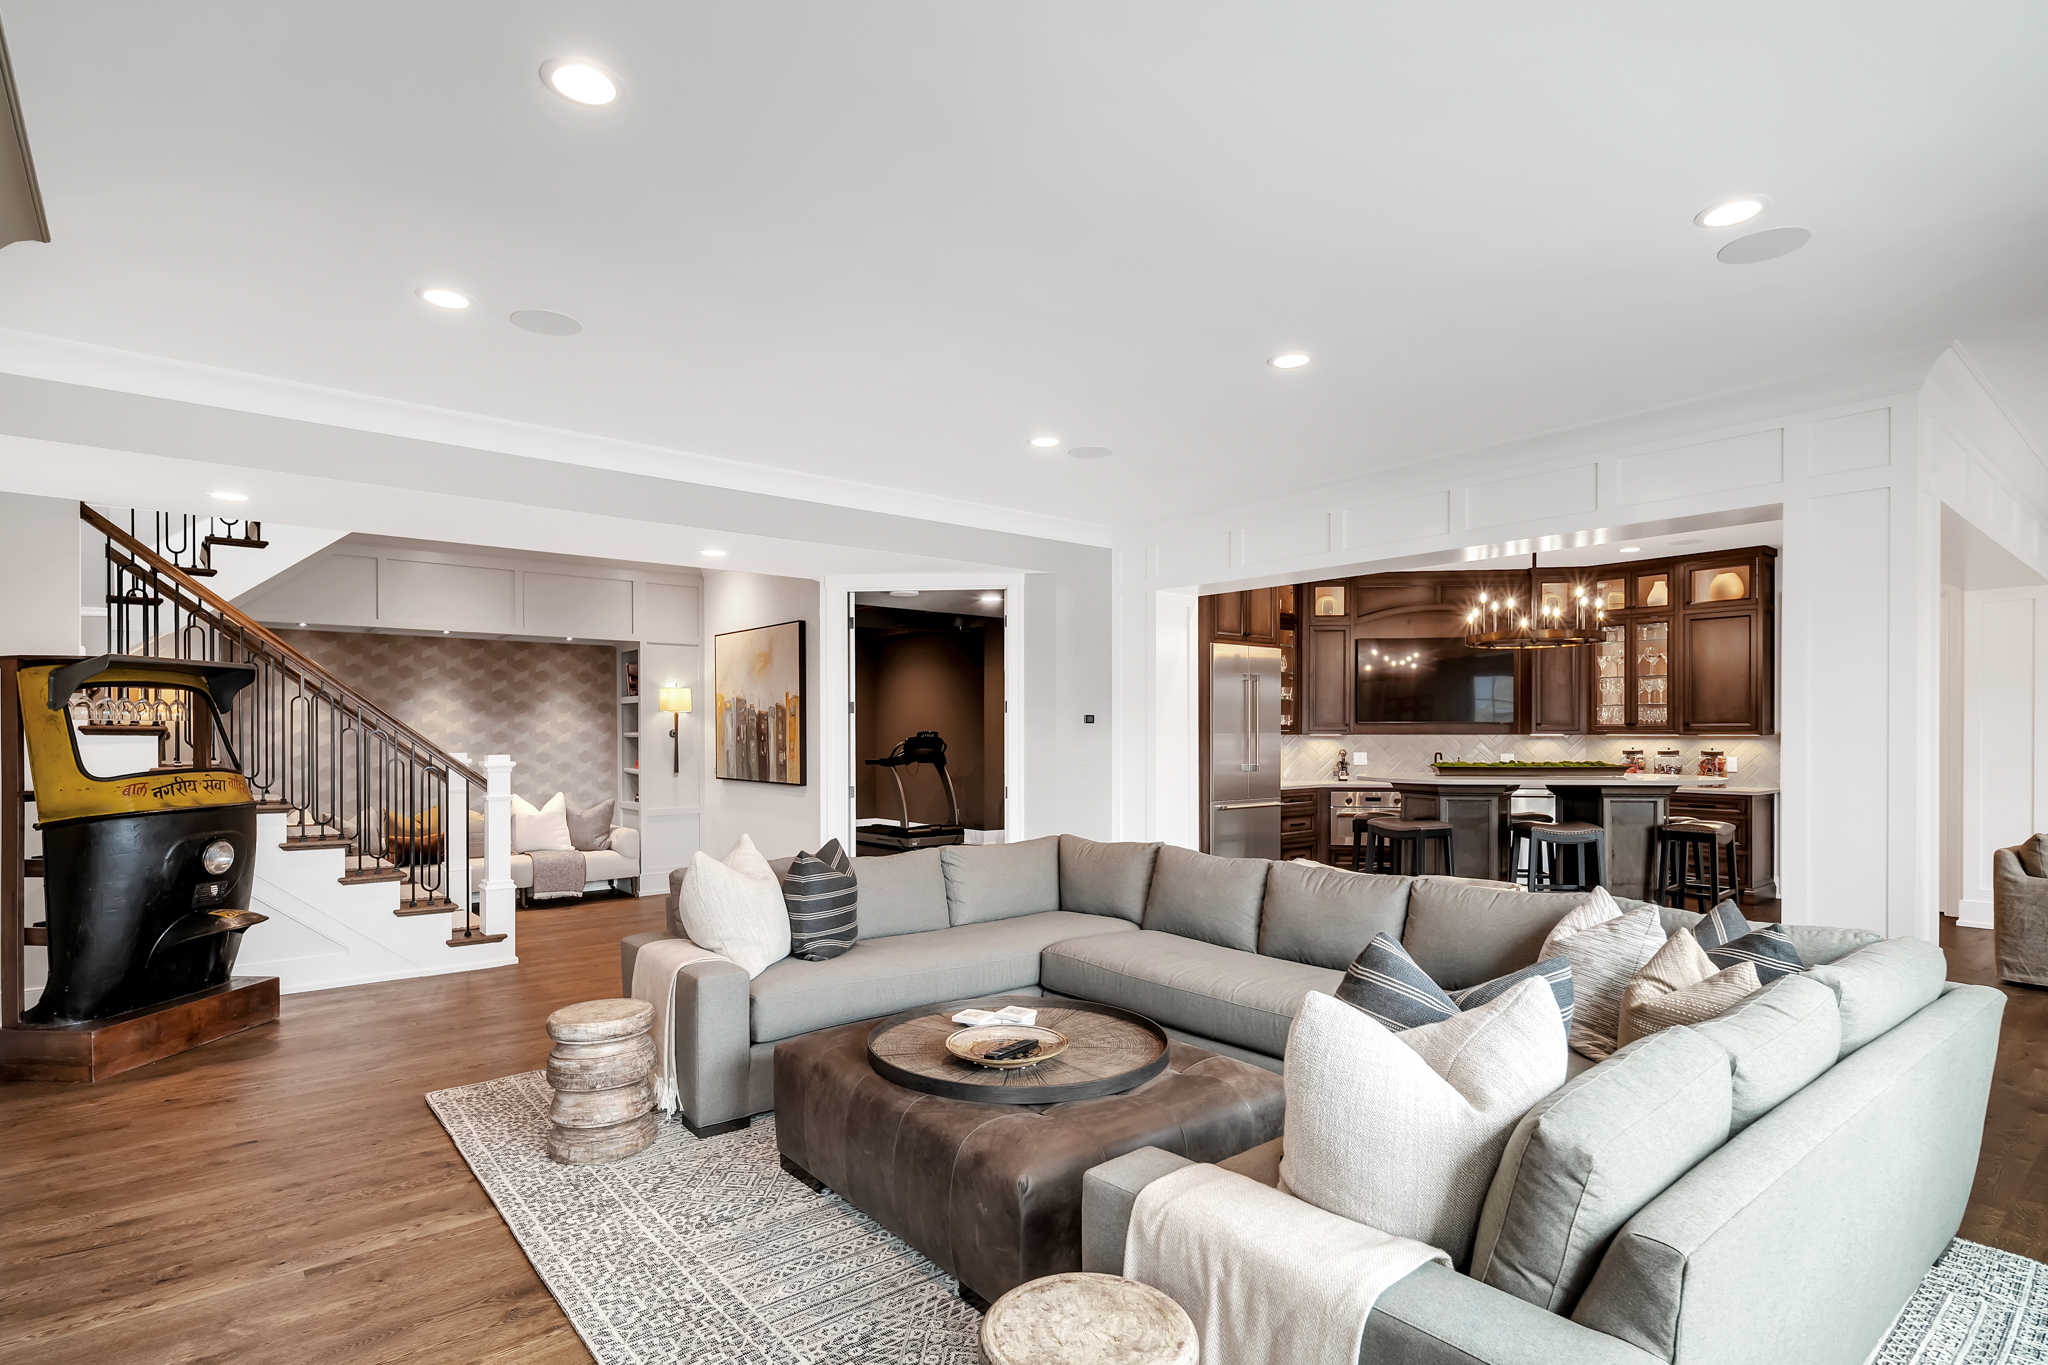 Schnicke Design Build Remodel New Home Construction Living Room